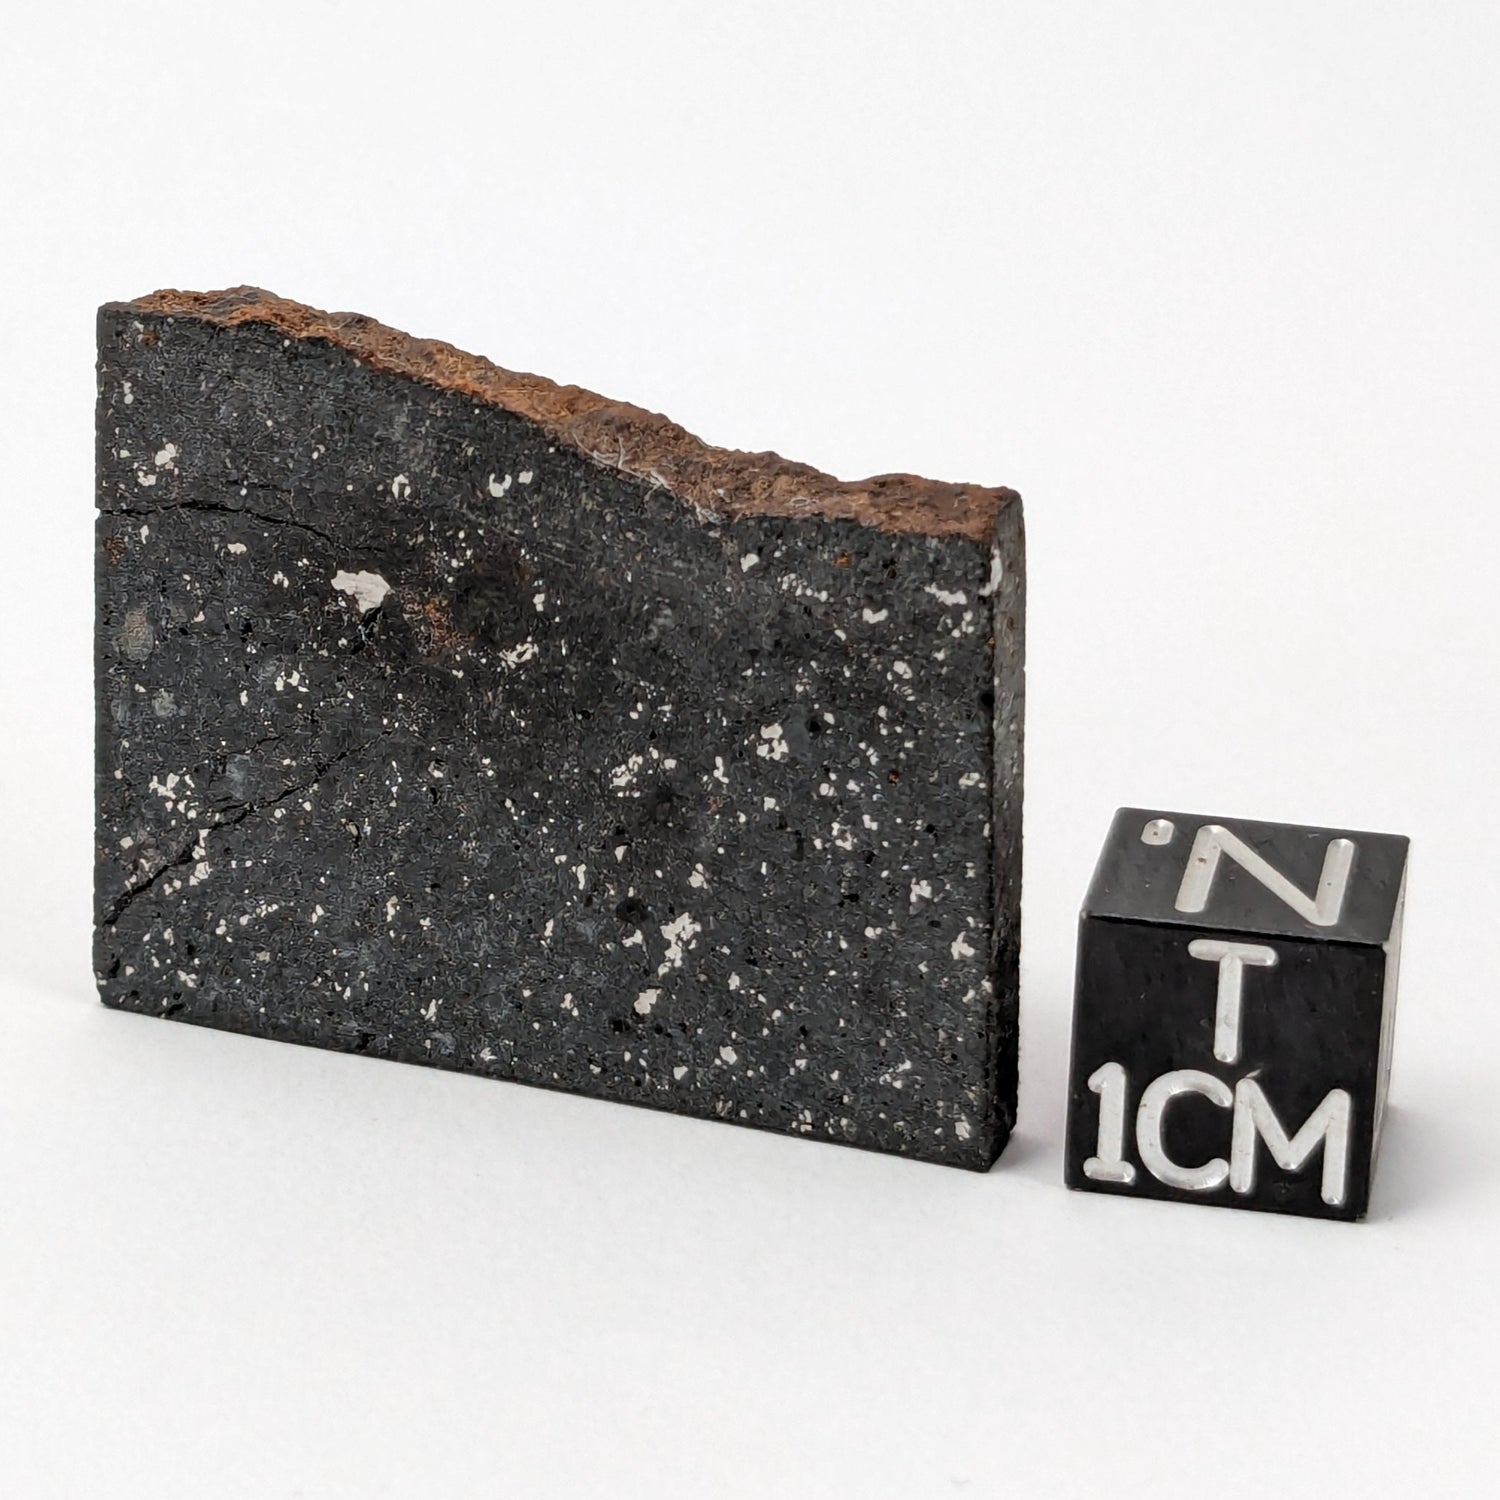 NWA 091 Meteorite | 11.53 Gr | Part Slice | L6 Chondrite | Low TKW | Sahara